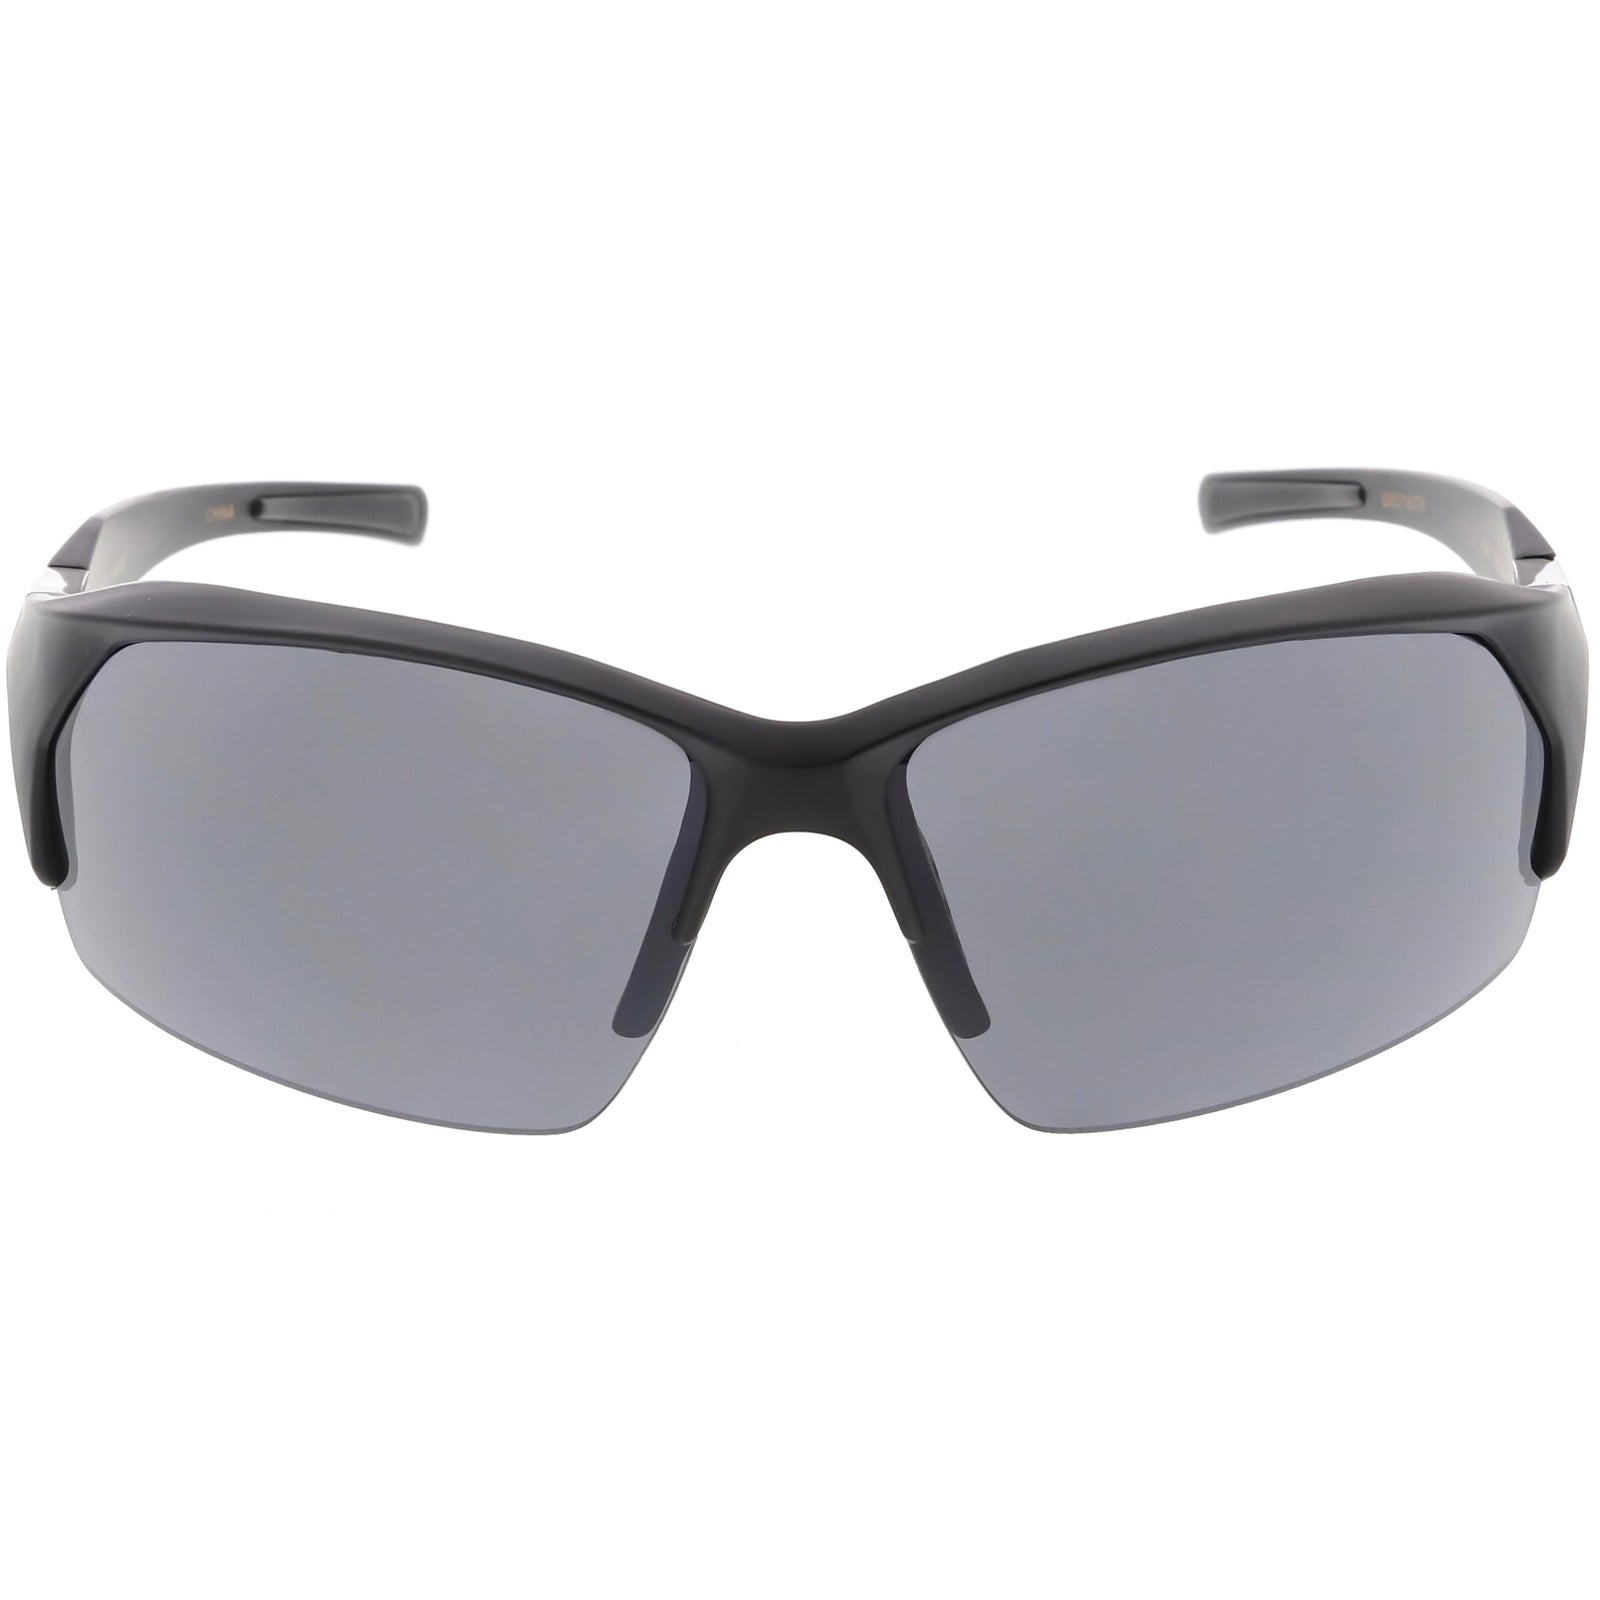 Wraparound Sunglasses for Men  zeroUV Eyewear Tagged square